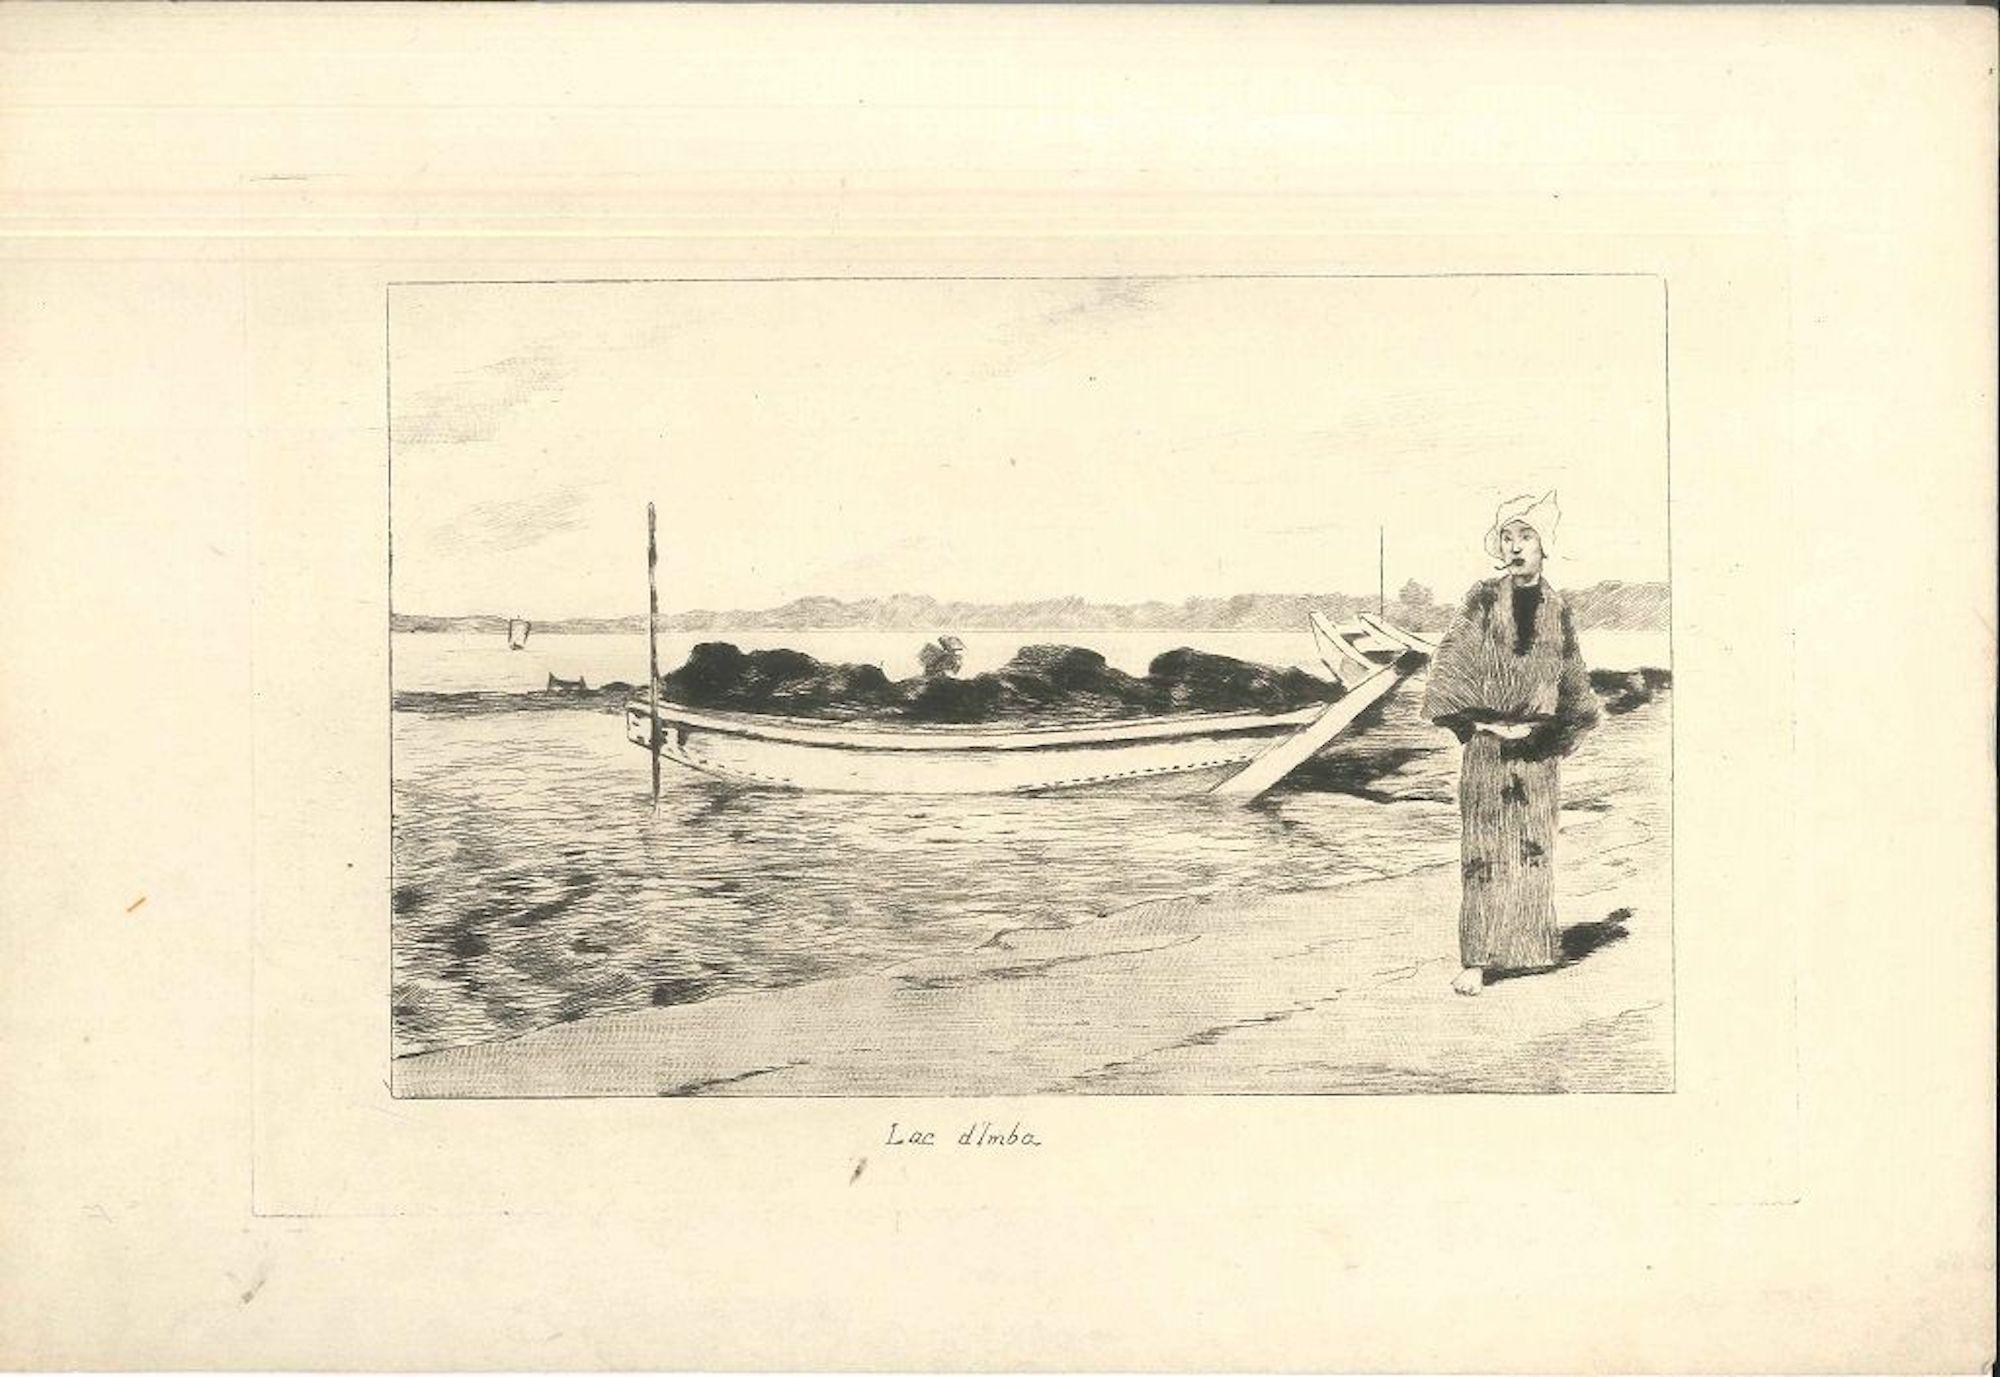 George Ferdinand Bigot Figurative Print - Lac d'Imba - Etching on Japan Paper by G. F. Bigot - Tokyo 1886